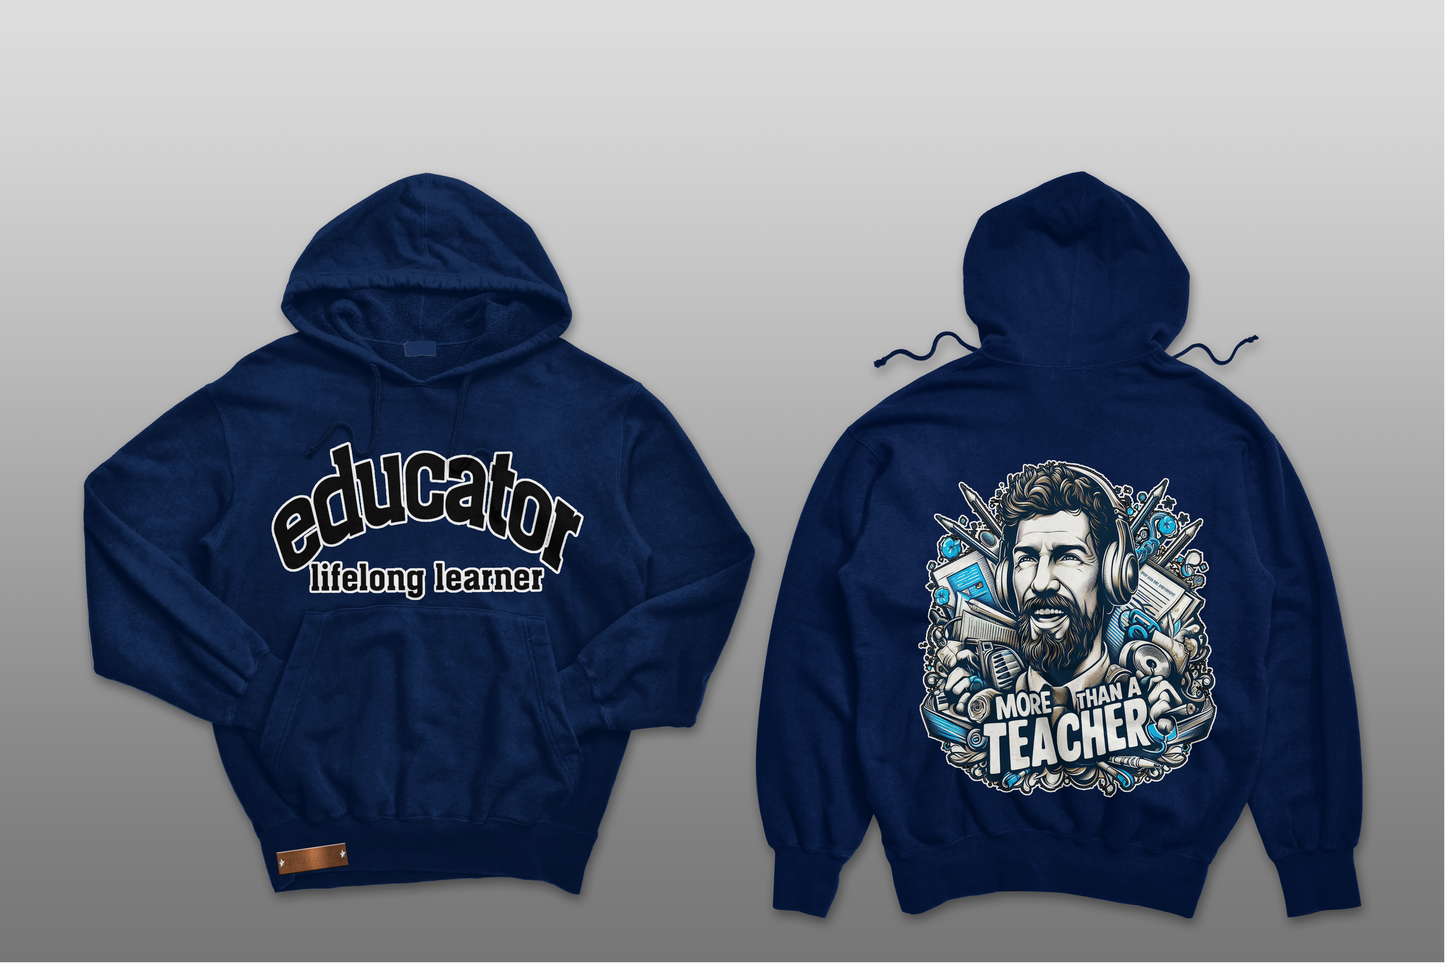 Educator "More Than A Teacher" Hoodie